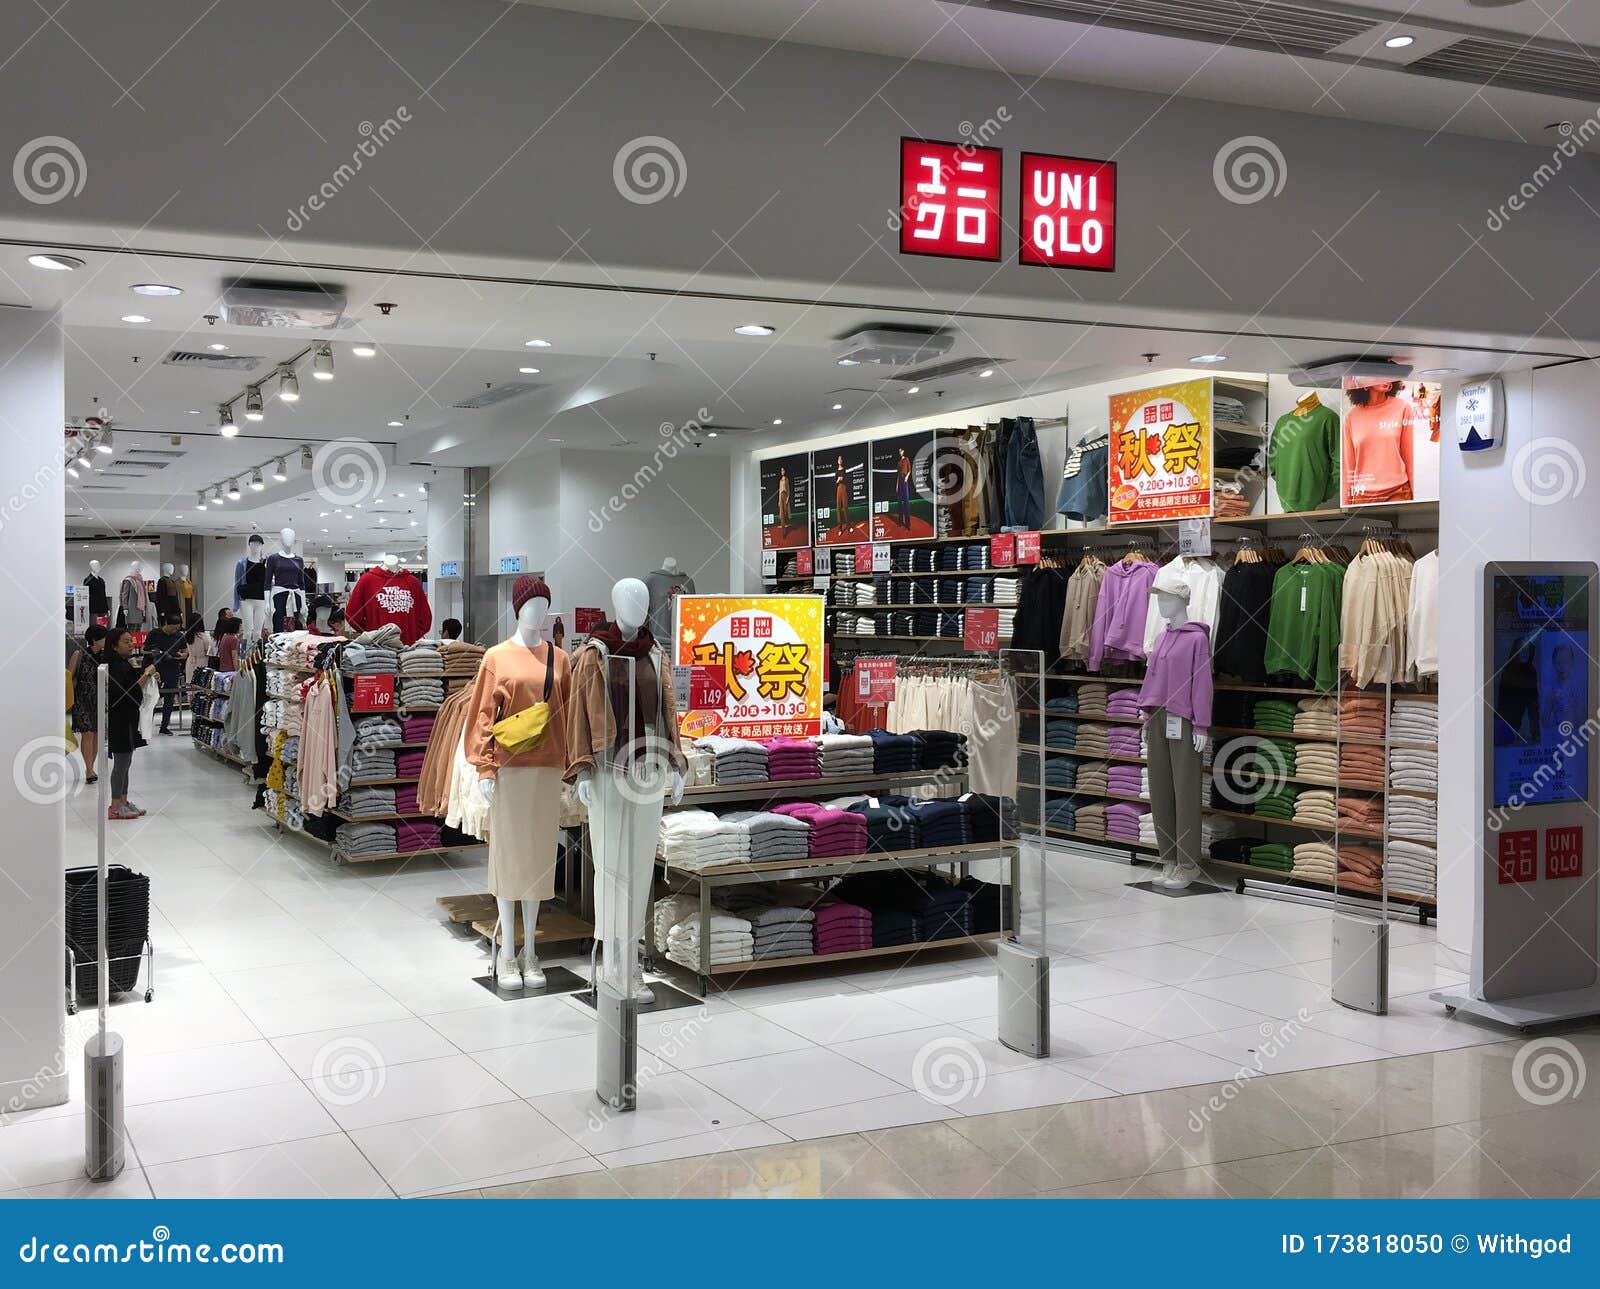 Uniqlo Store at Mira Place 1, Hong Kong Editorial Image - Image of place,  clothing: 173818050